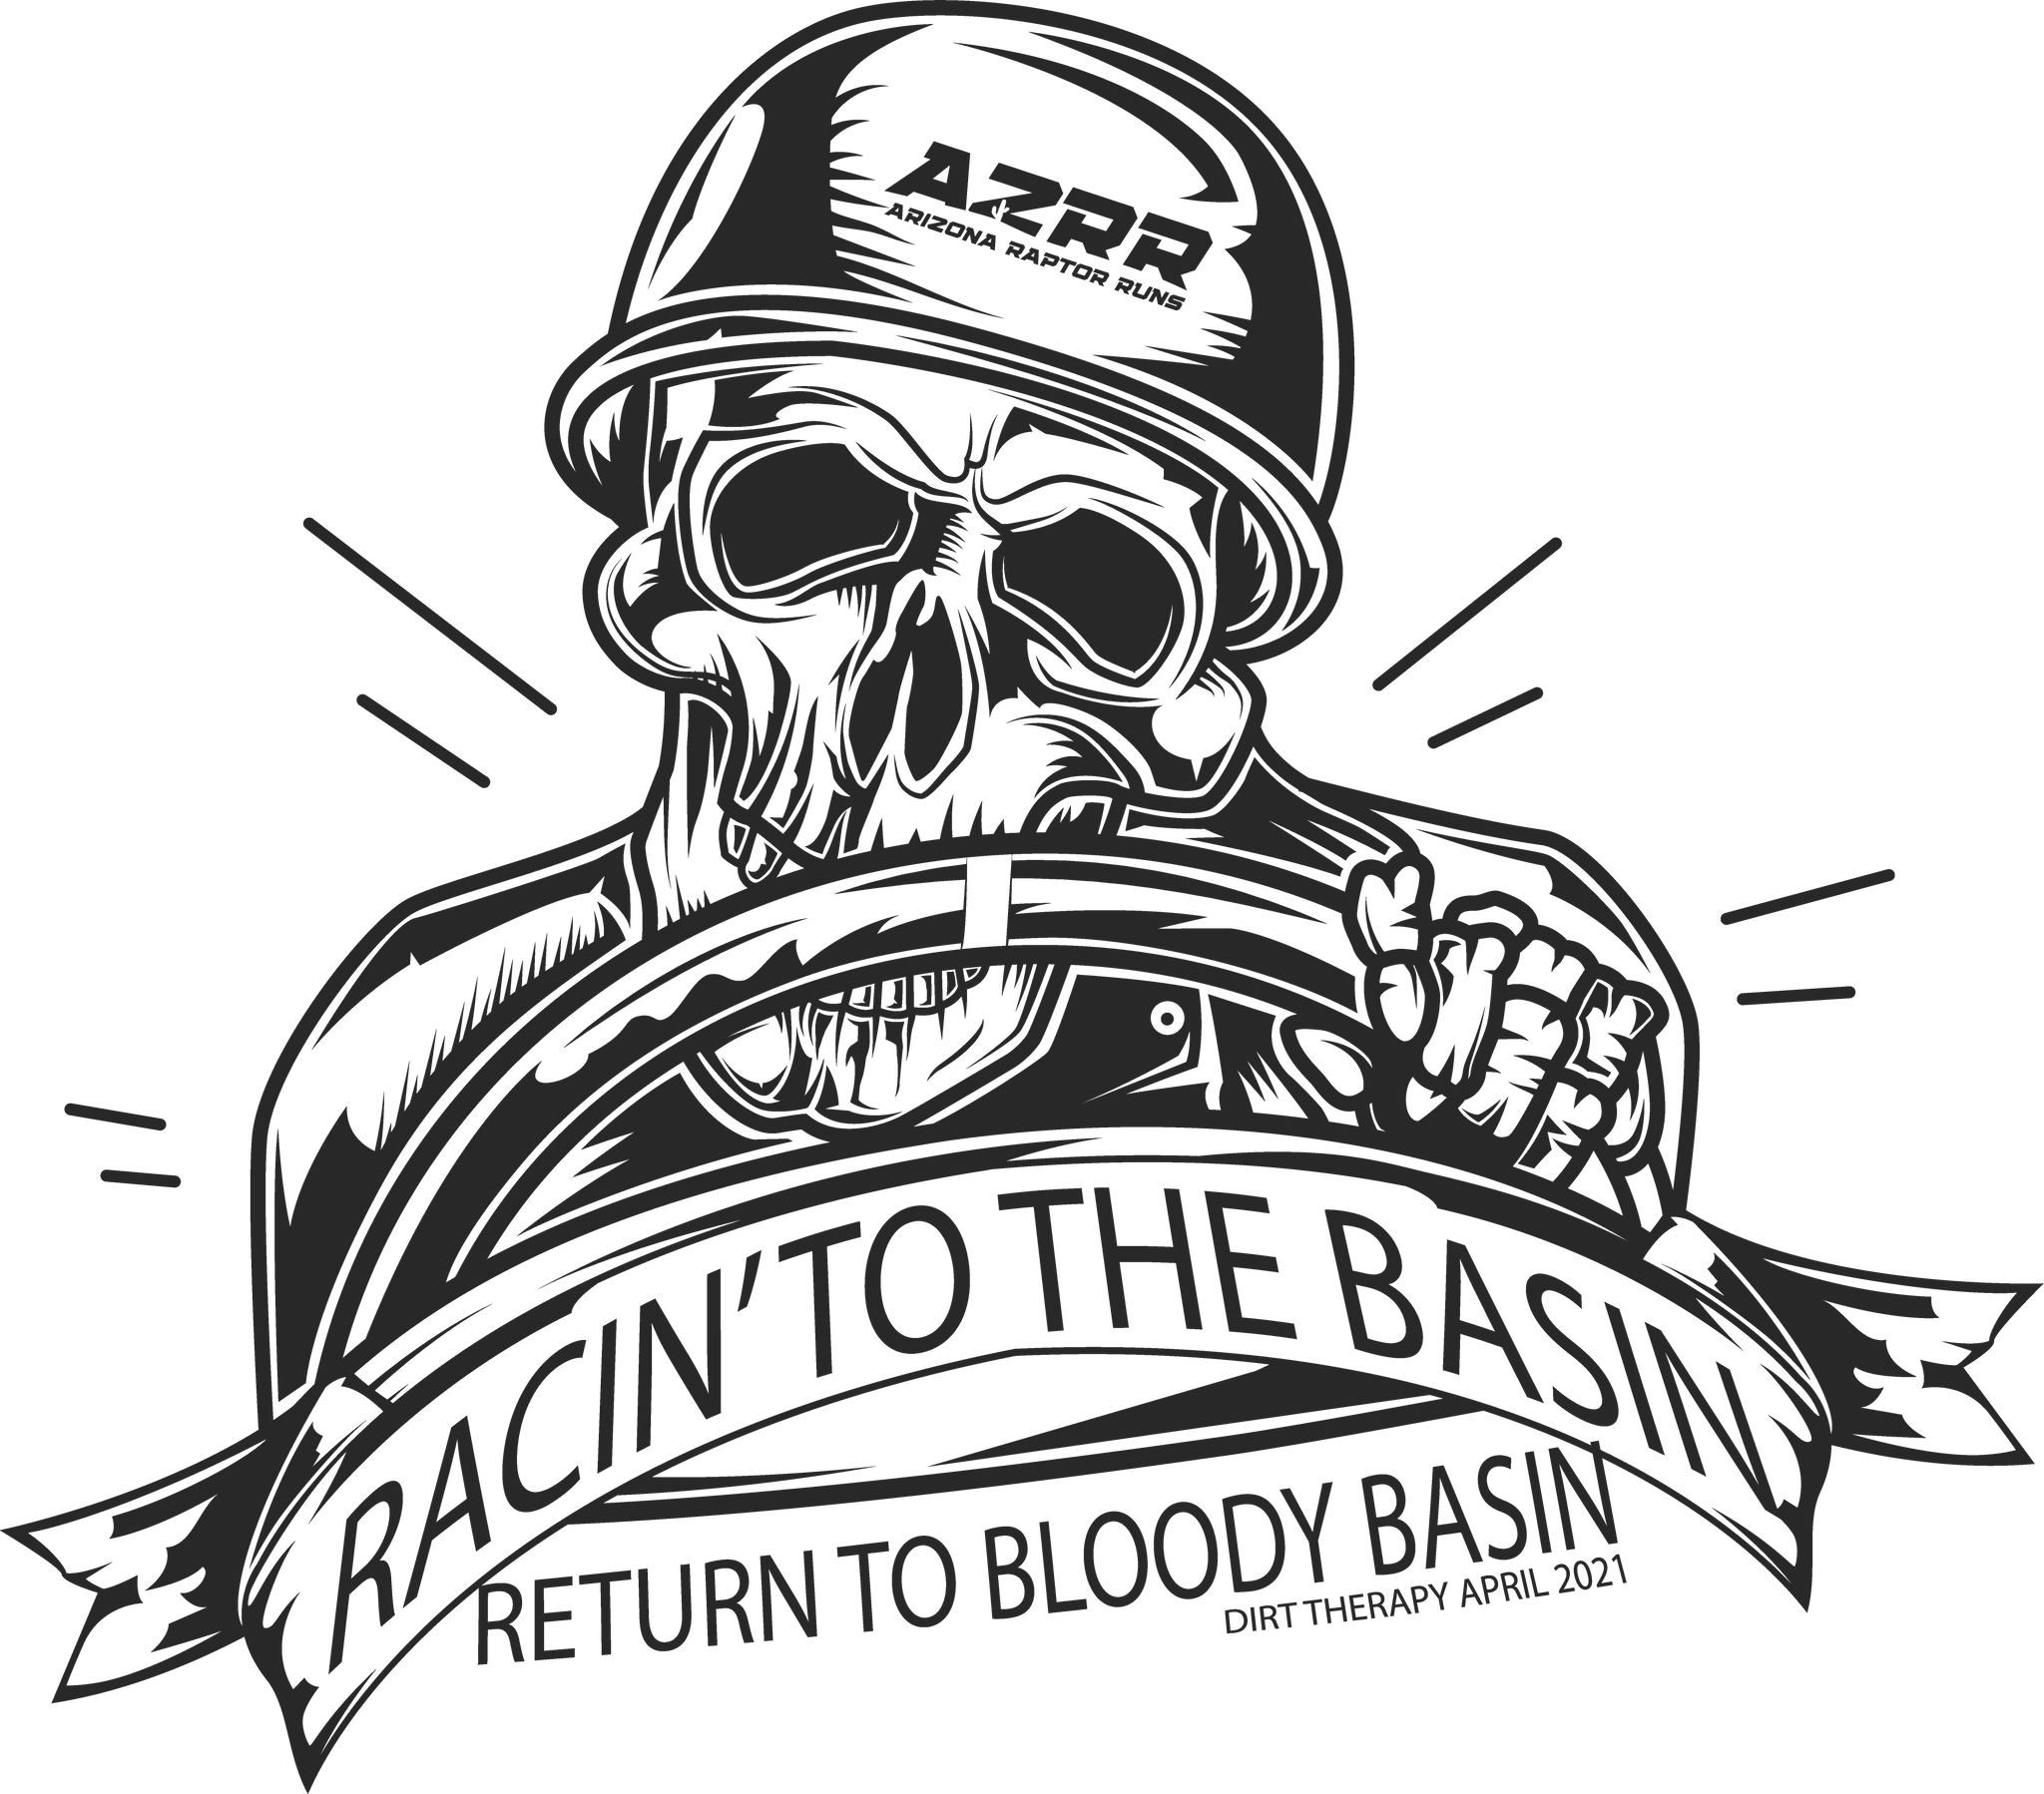 2021 Racin' To The Basin T-Shirt